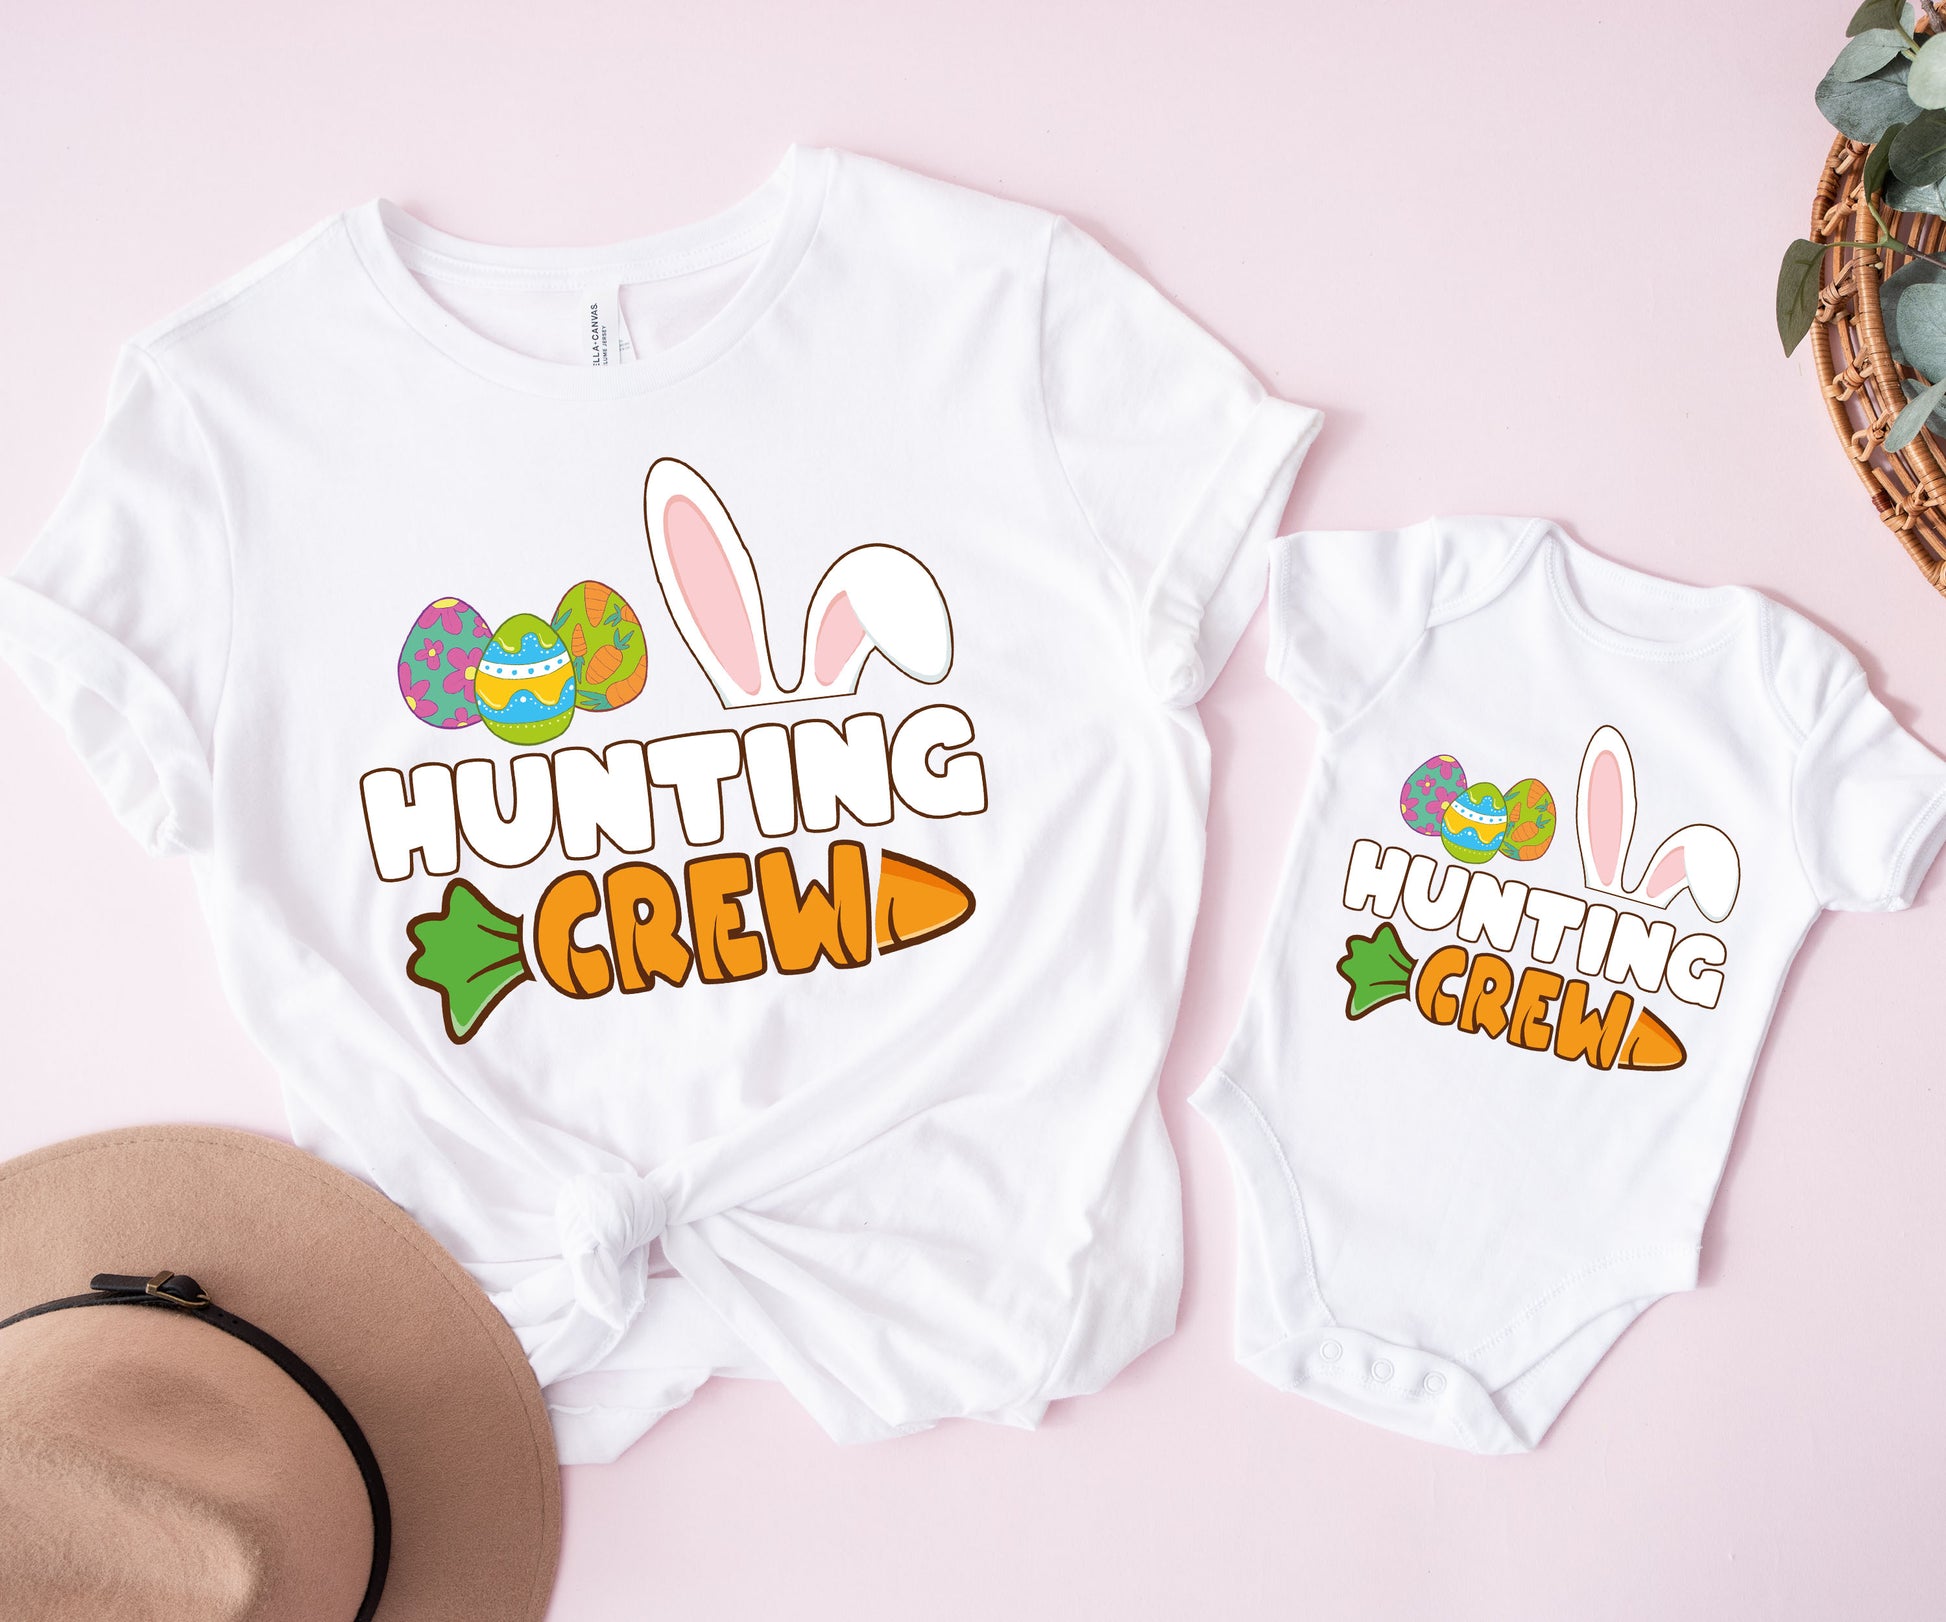 Hunting Crew Shirts, Easter Egg Hunting Shirts, Hunting Easter Bunny-newamarketing